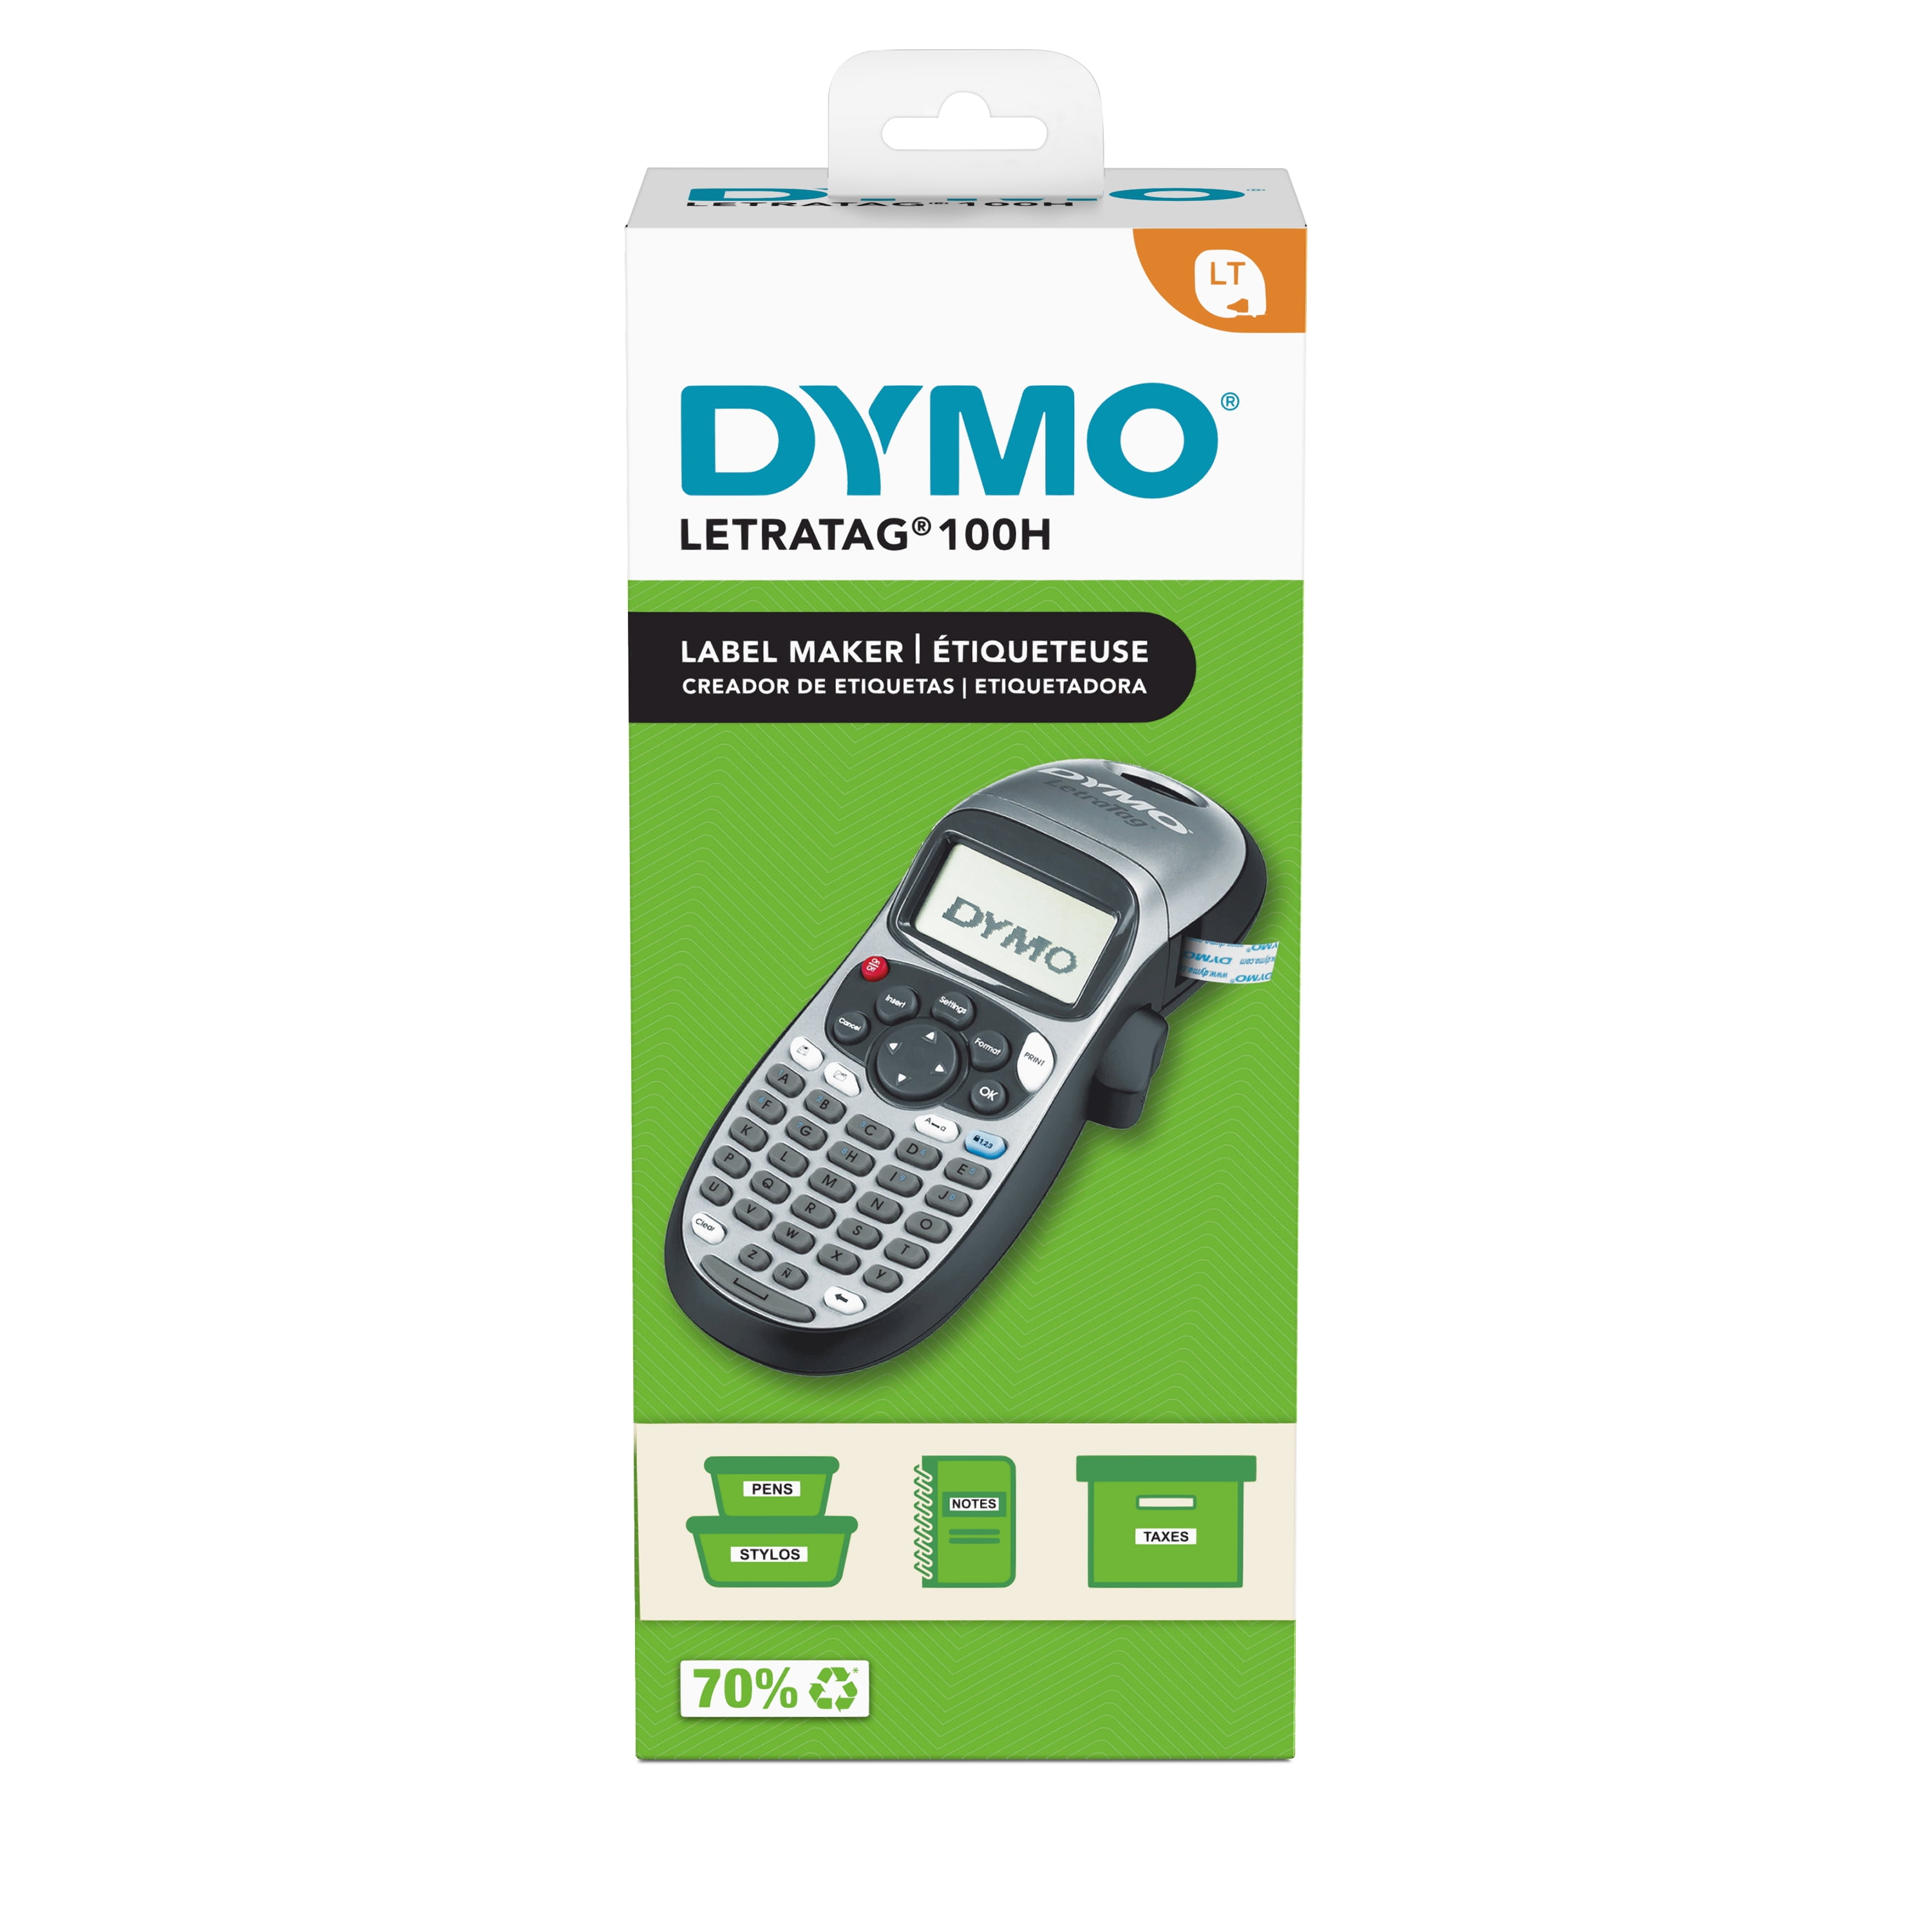 DYMO LetraTag 200B Black Portable Compact Bluetooth Label Maker 2177407 for  sale online